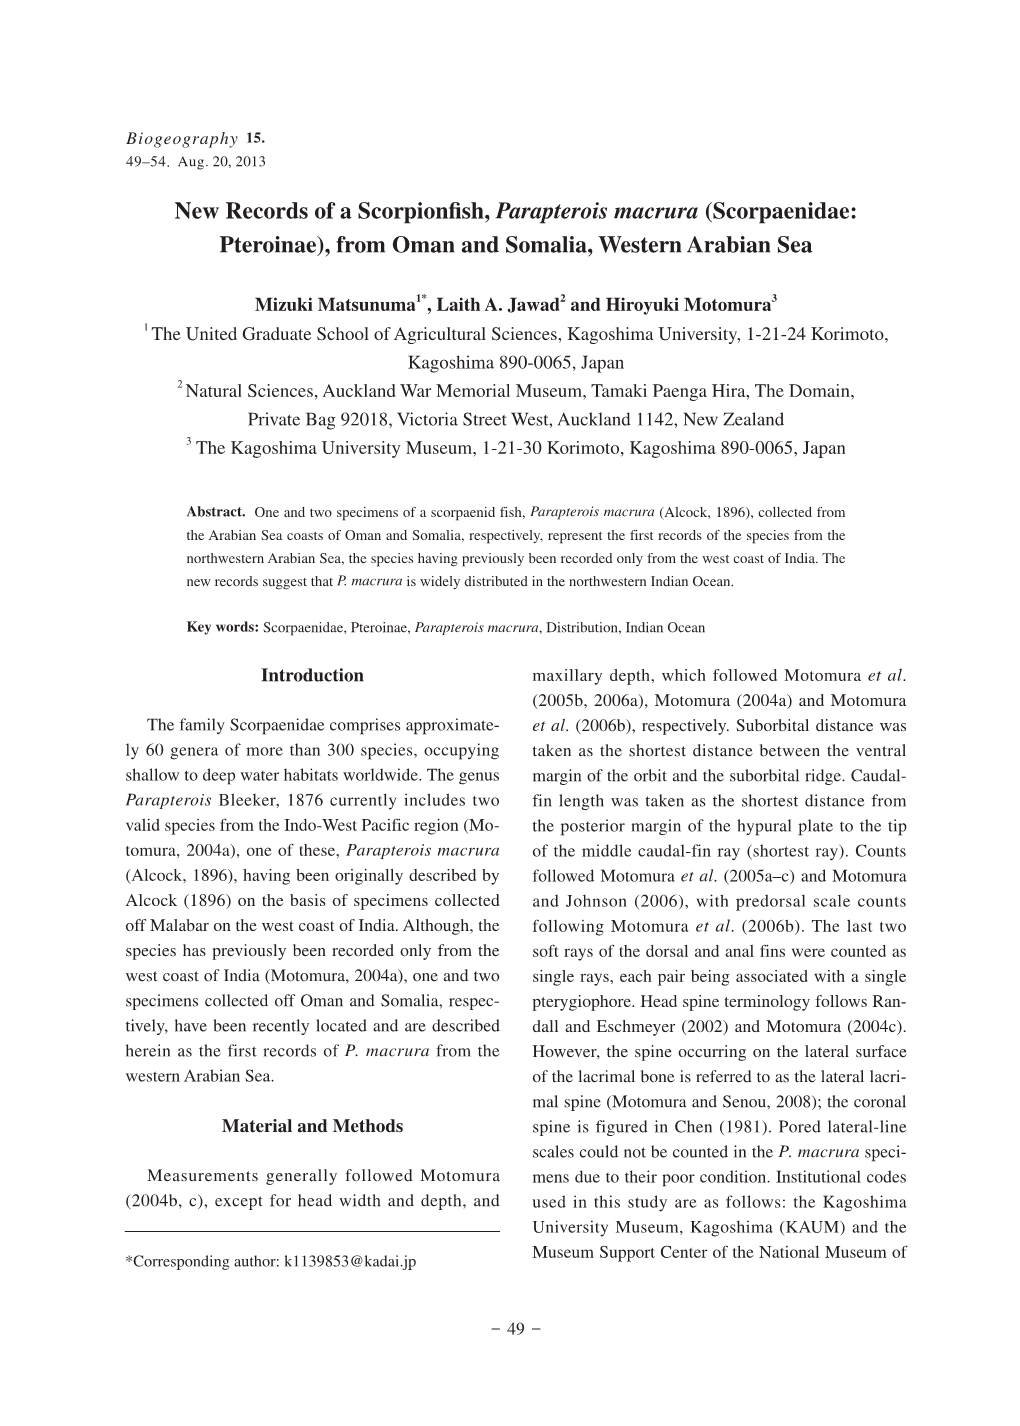 New Records of a Scorpionfish, Parapterois Macrura (Scorpaenidae: Pteroinae), from Oman and Somalia, Western Arabian Sea